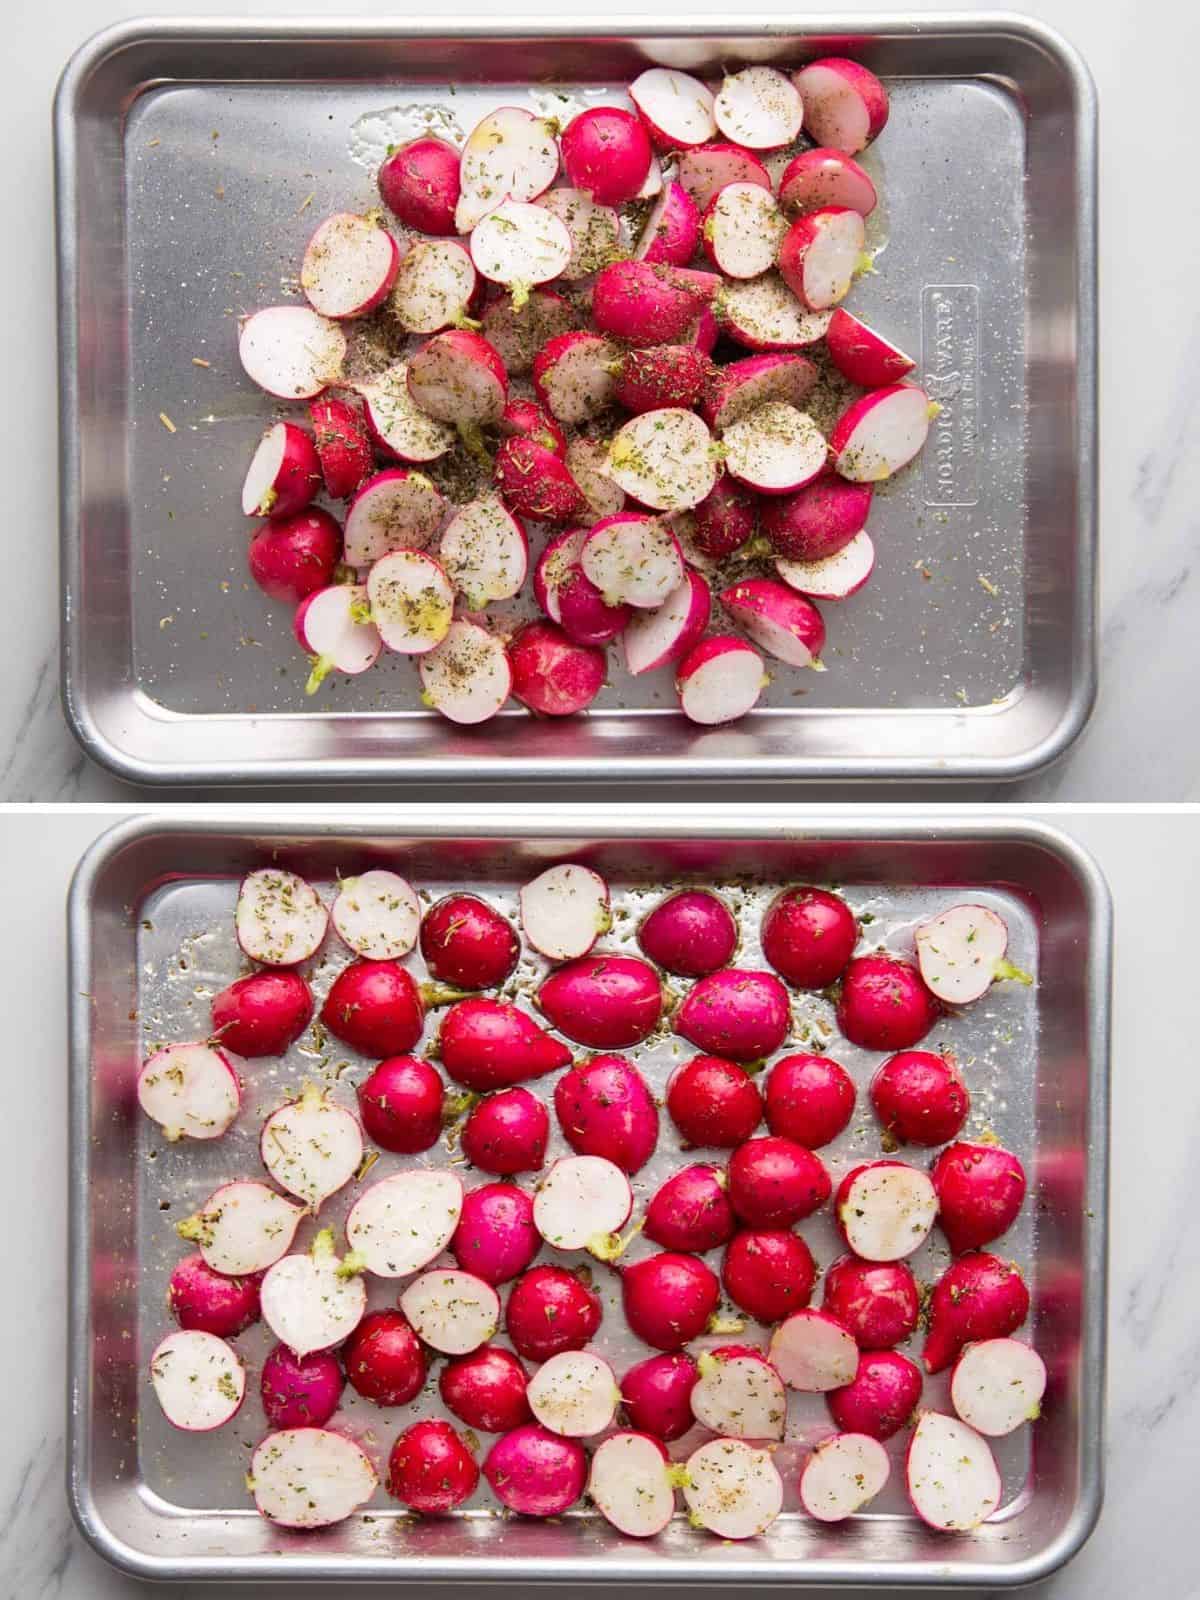 Steps how to season and roast radishes